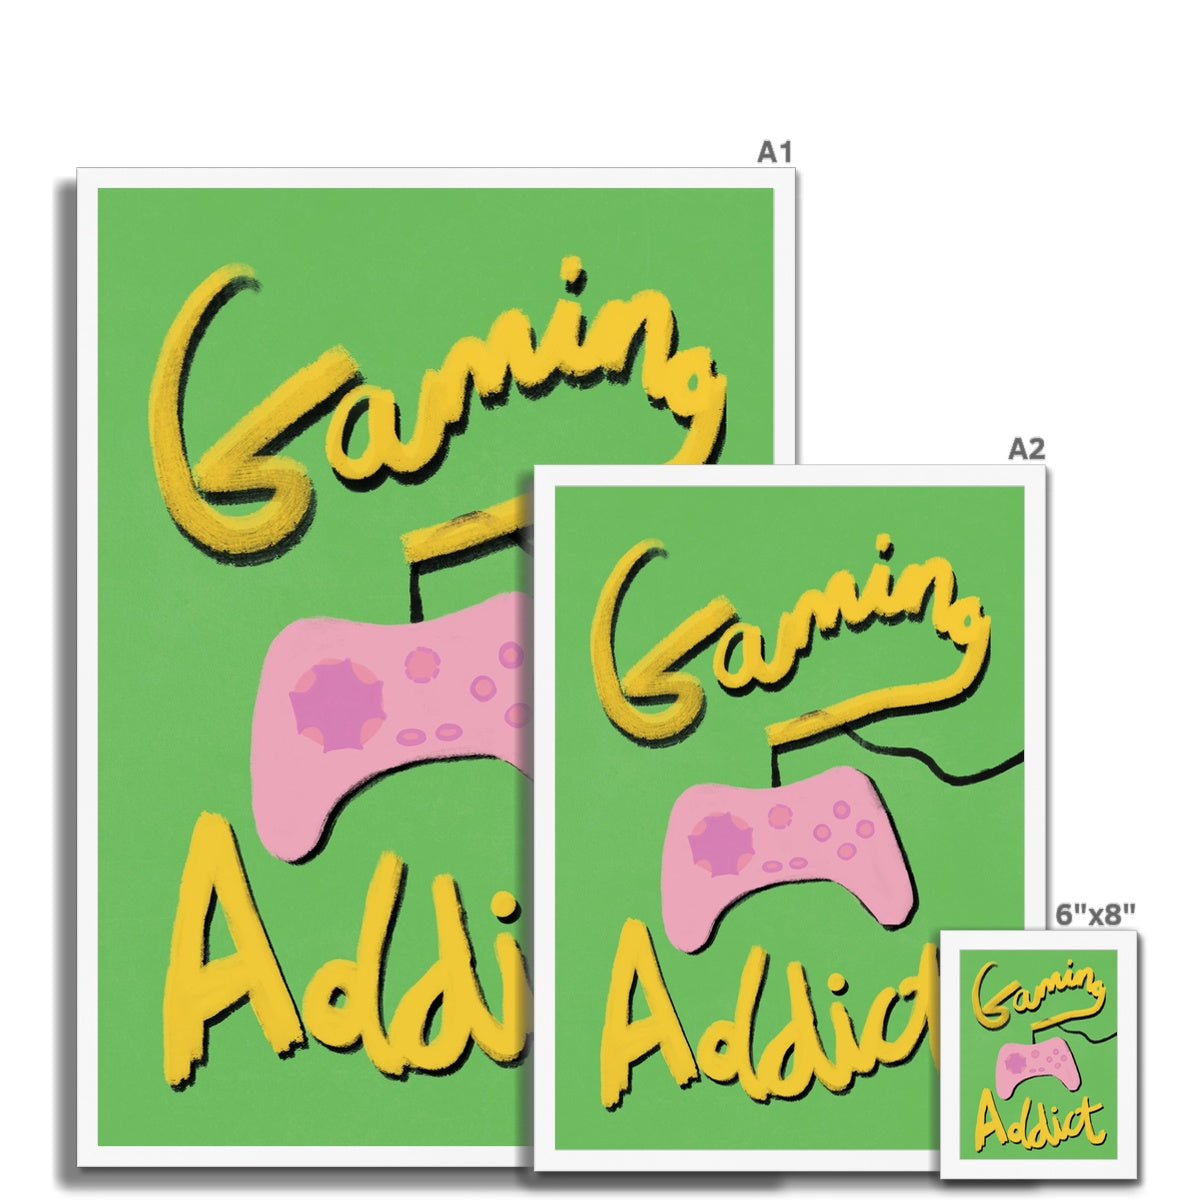 Gaming Addict Print - Green, Yellow, Pink Framed Print